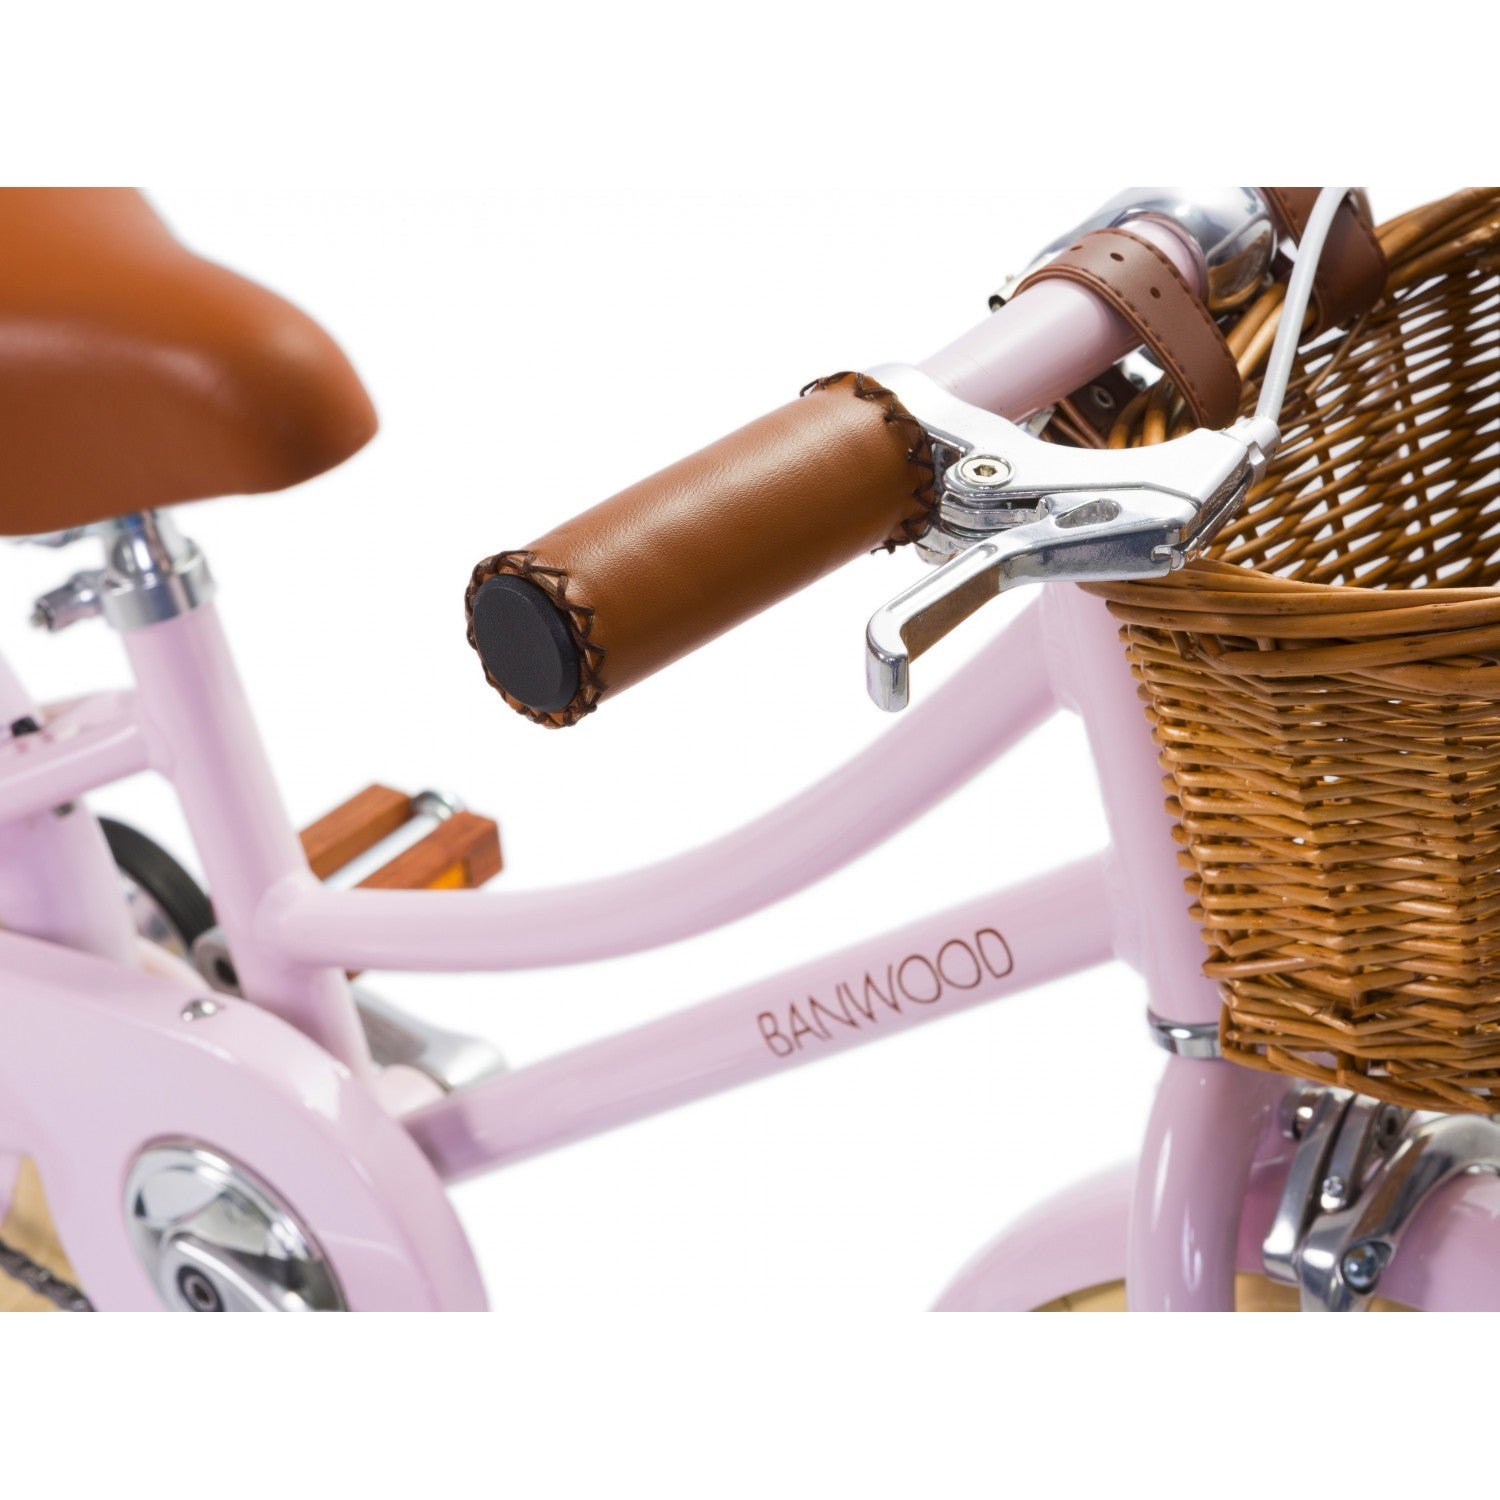 banwood pink bike